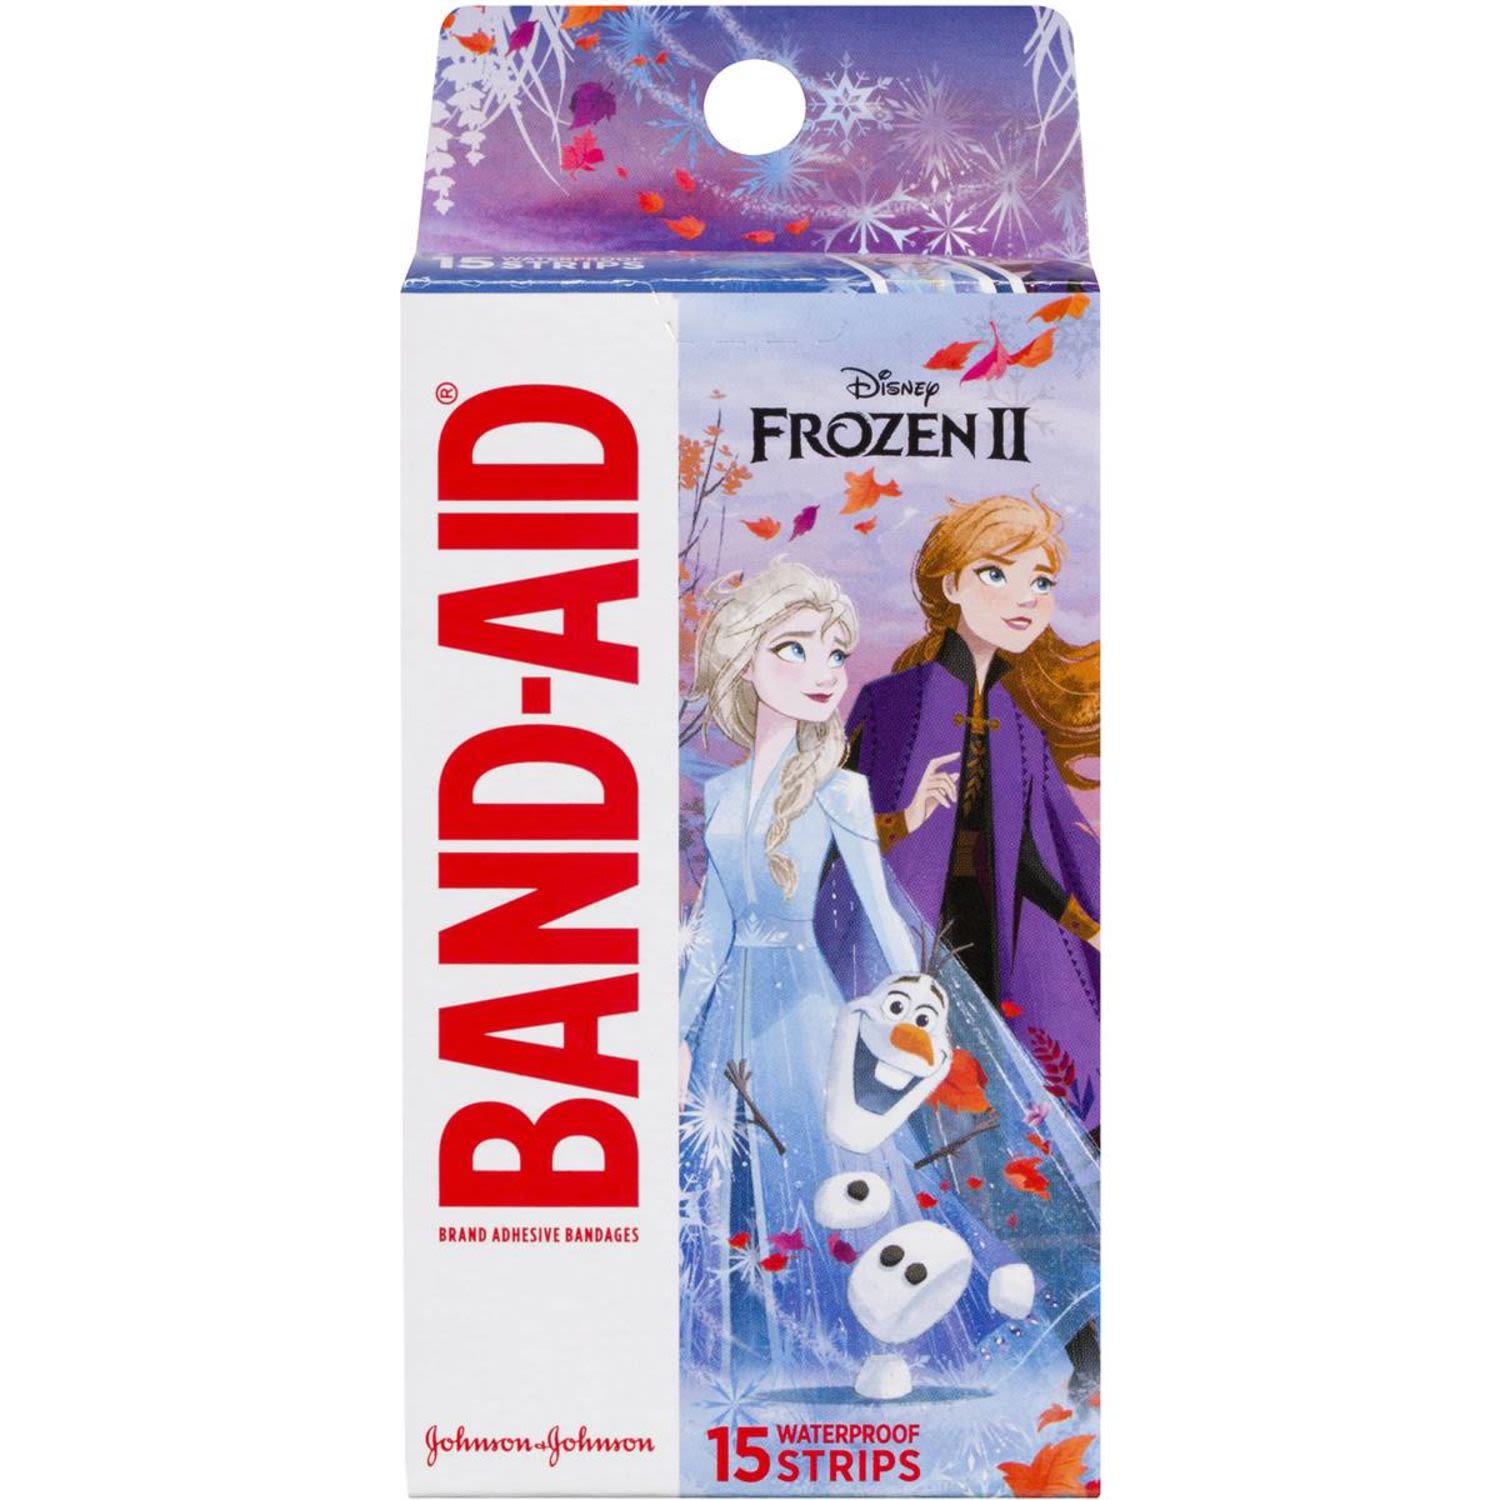 Band-aid Adhesive Bandages Disney Frozen, 15 Each